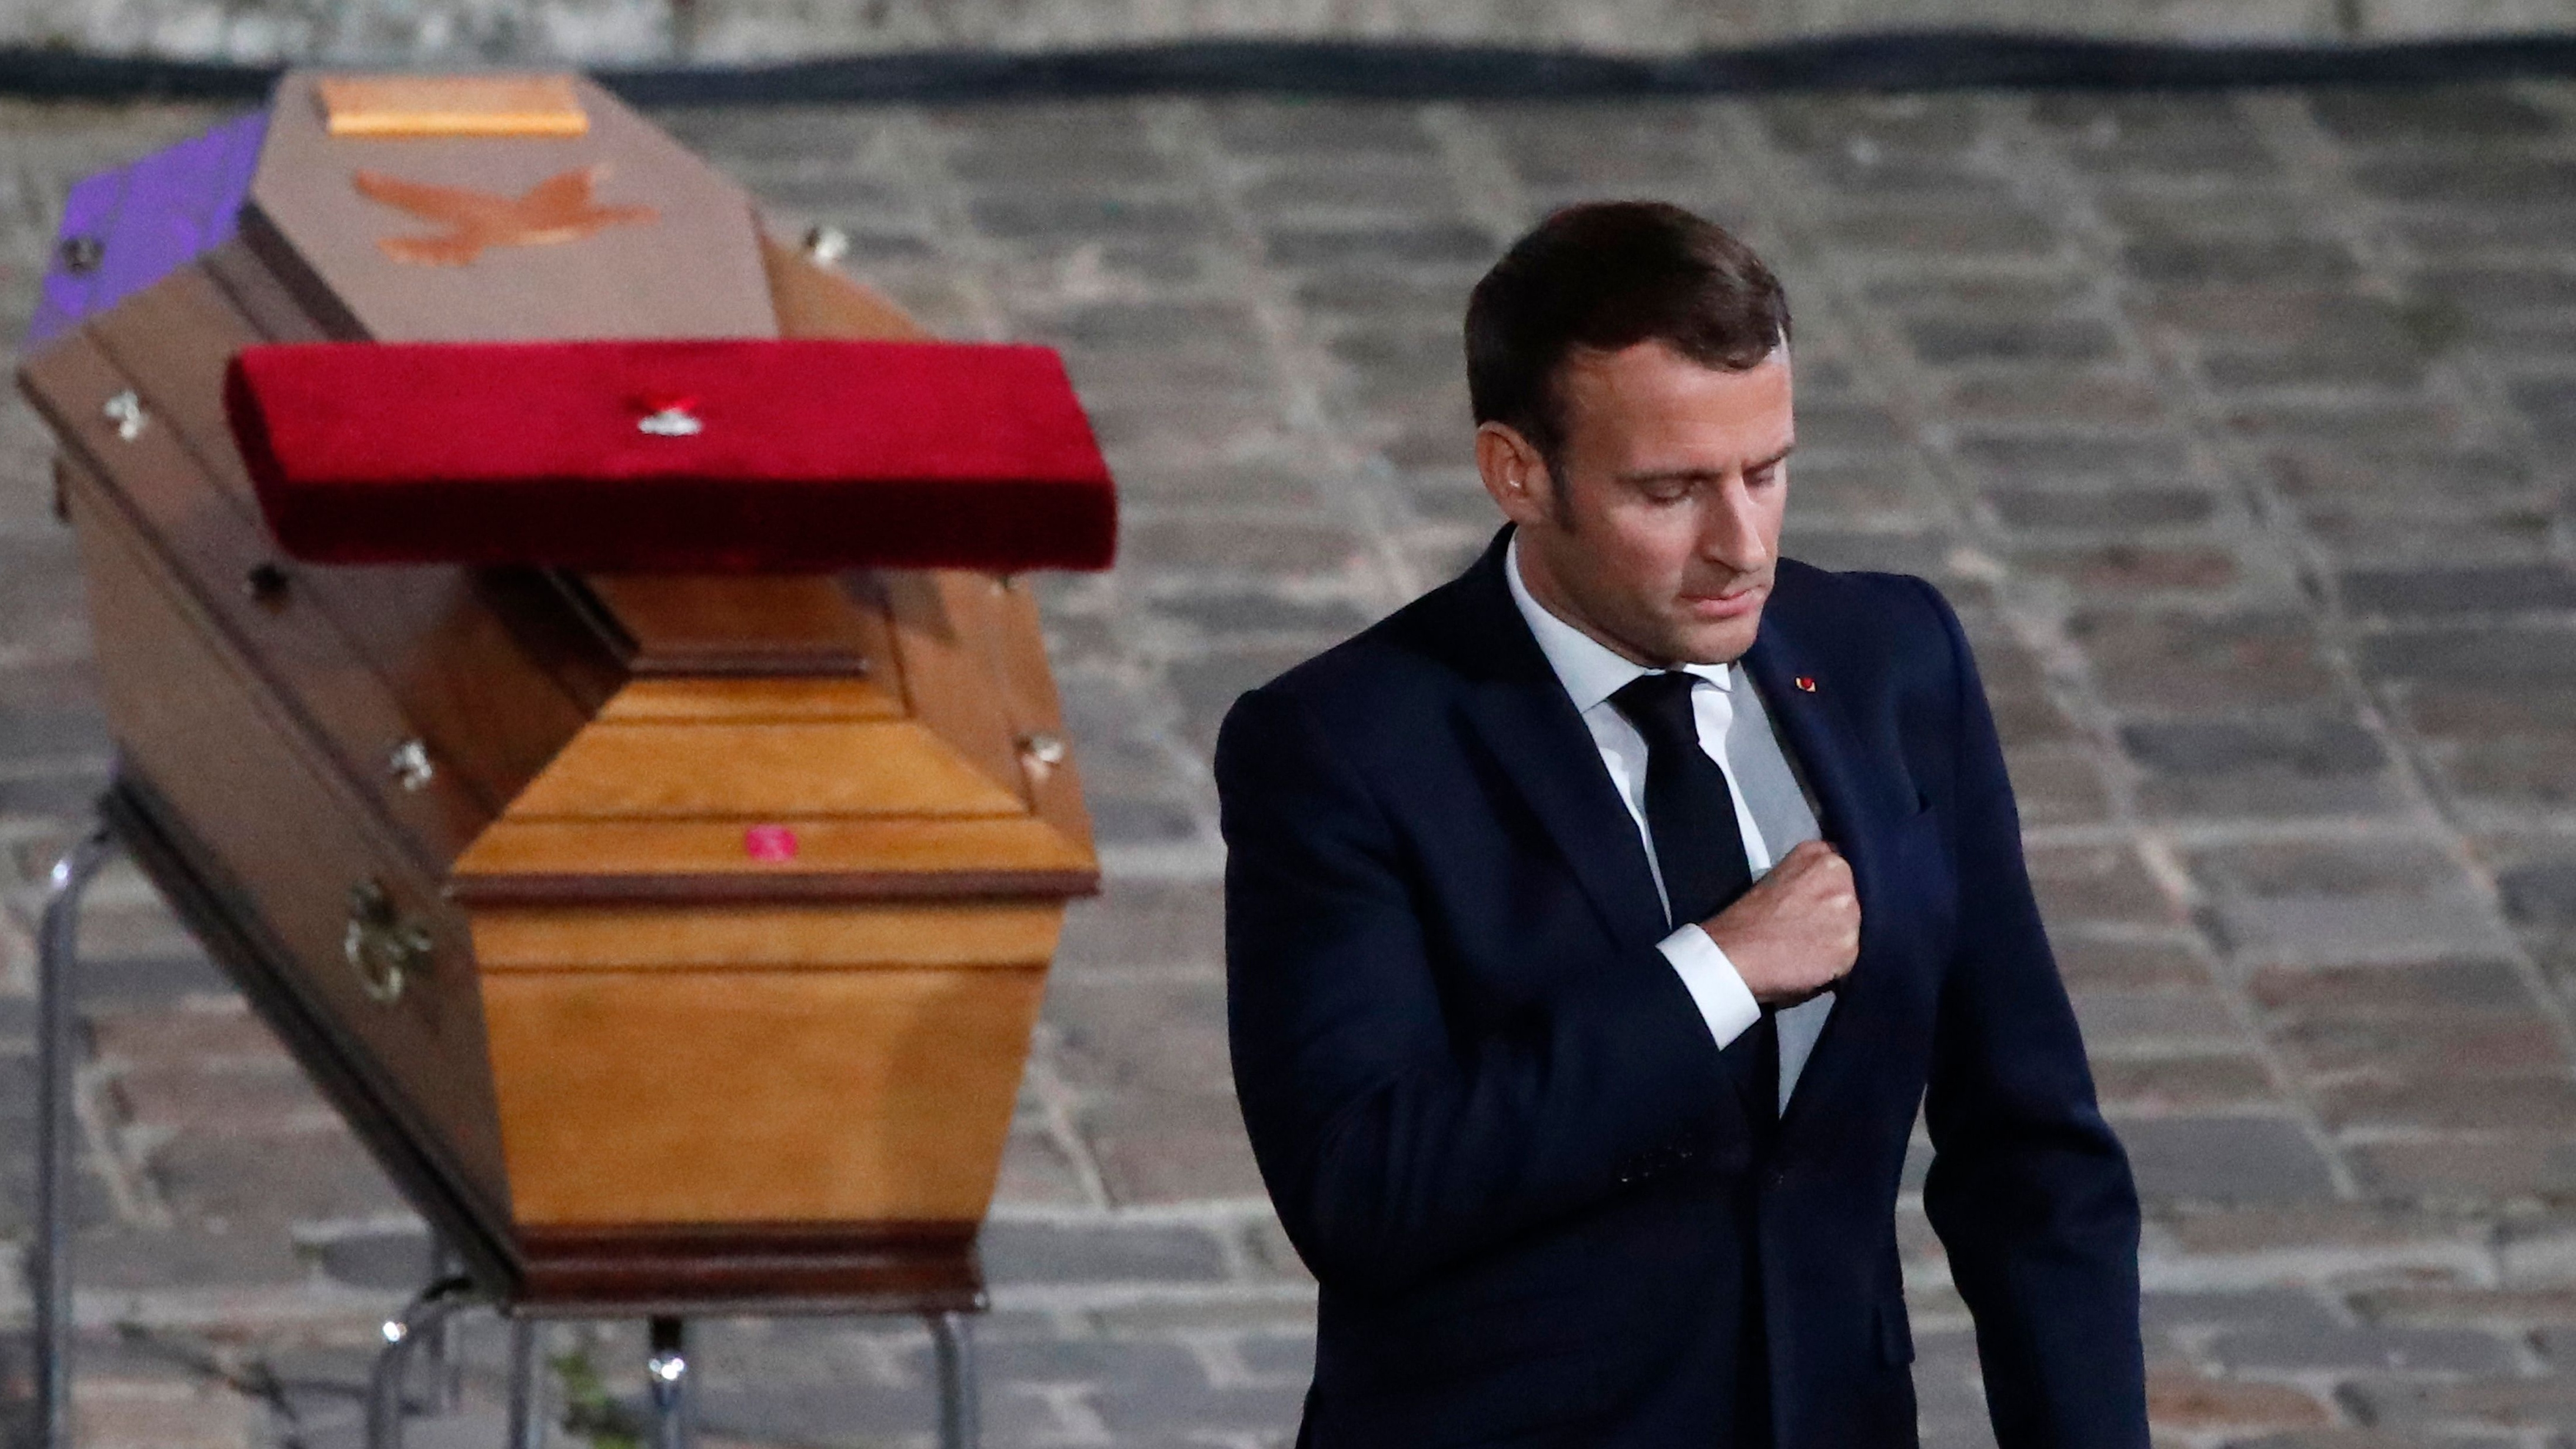 Emmanuel Macron pays his respects by the coffin of Samuel Paty&#039;s inside Sorbonne University&#039;s, Paris.